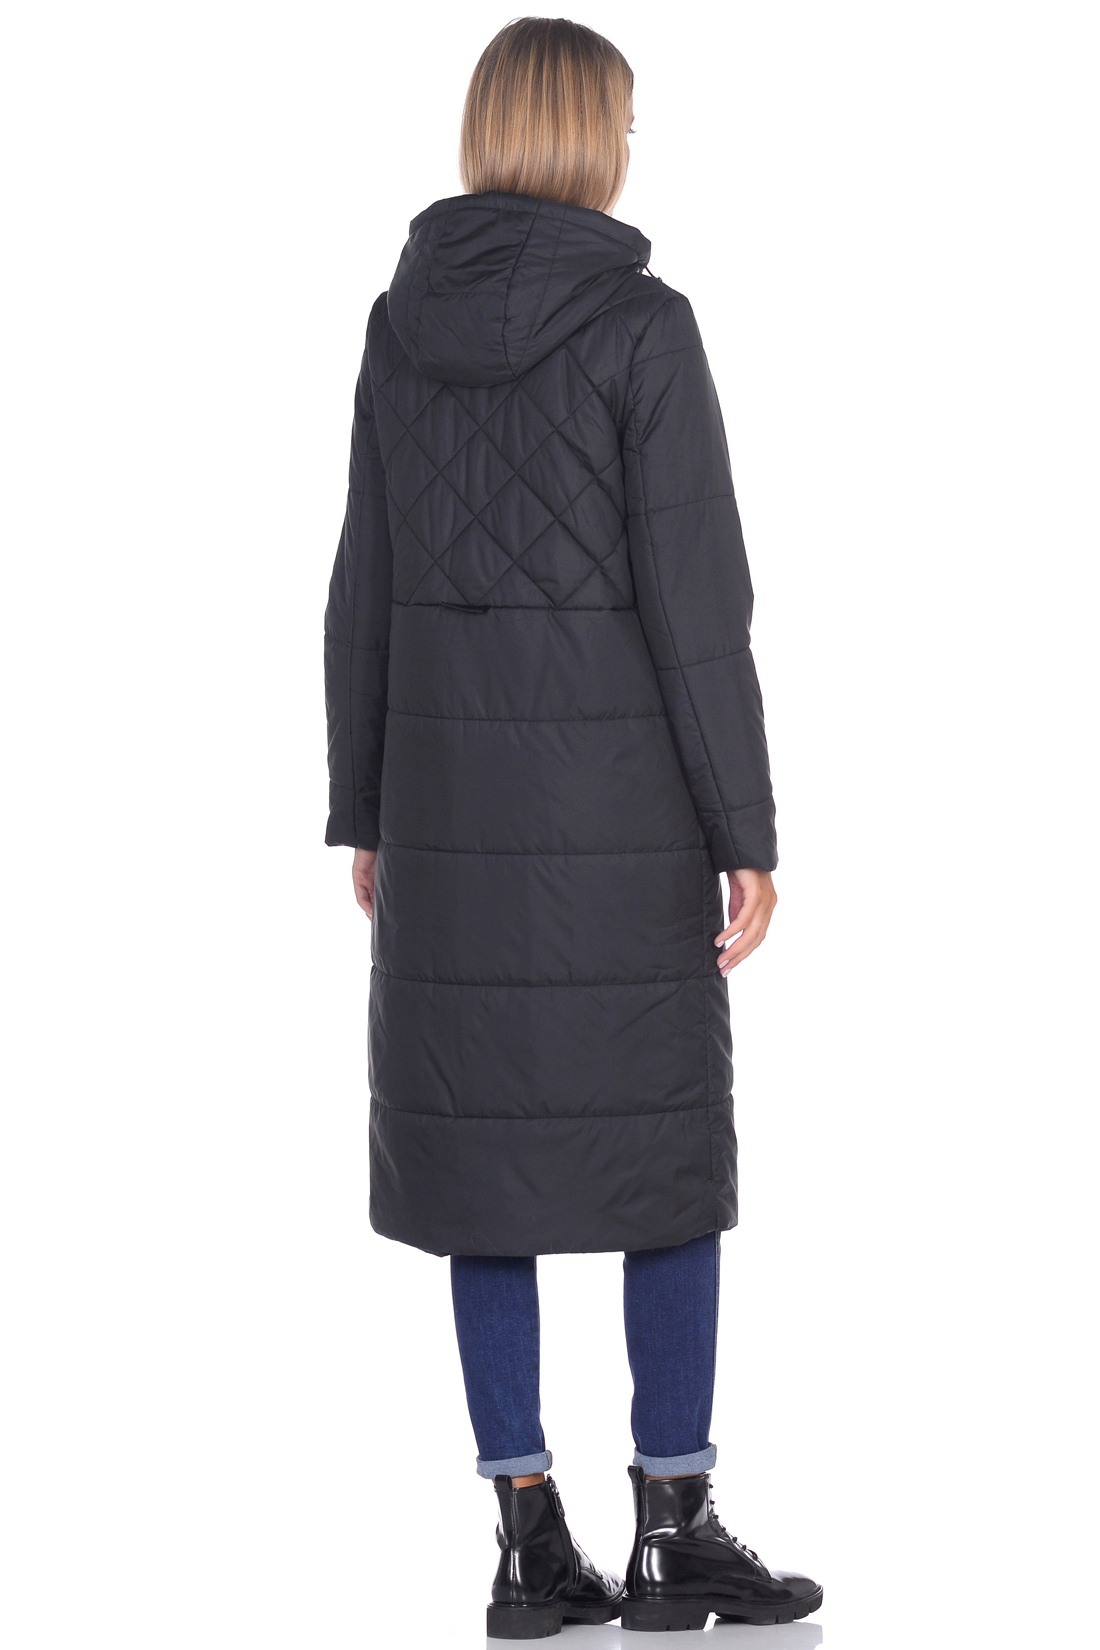 Удлинённая прямая куртка (арт. baon B039033), размер 3XL, цвет черный Удлинённая прямая куртка (арт. baon B039033) - фото 2